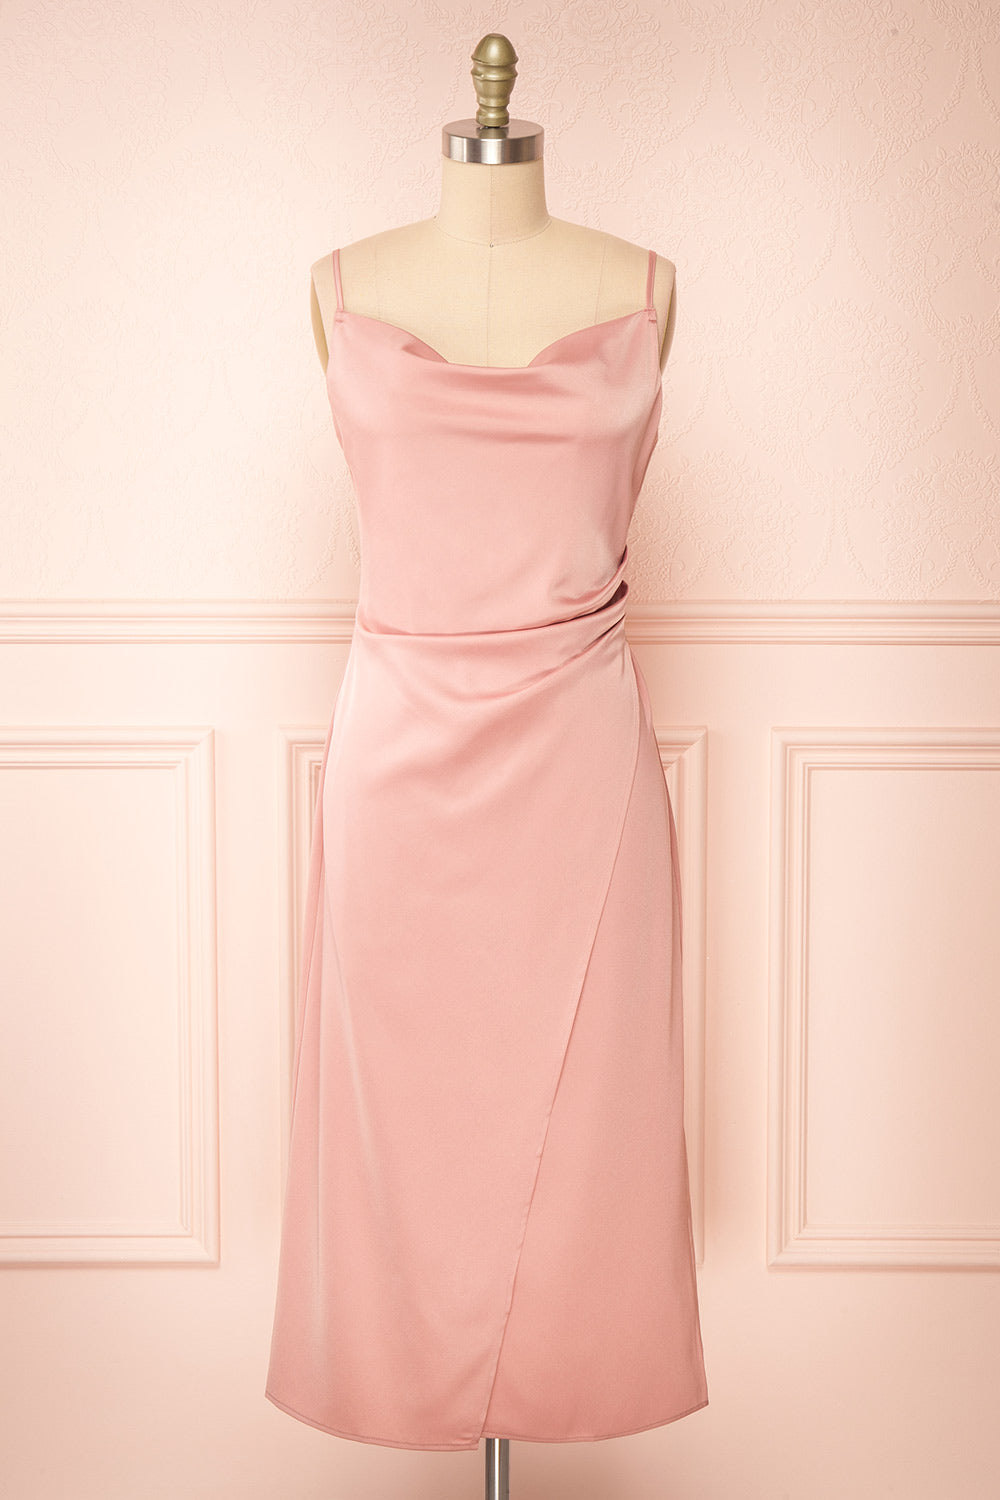 Pink Midi Dress - Satin Dress With Cowl Neck - Blush Slip Dress